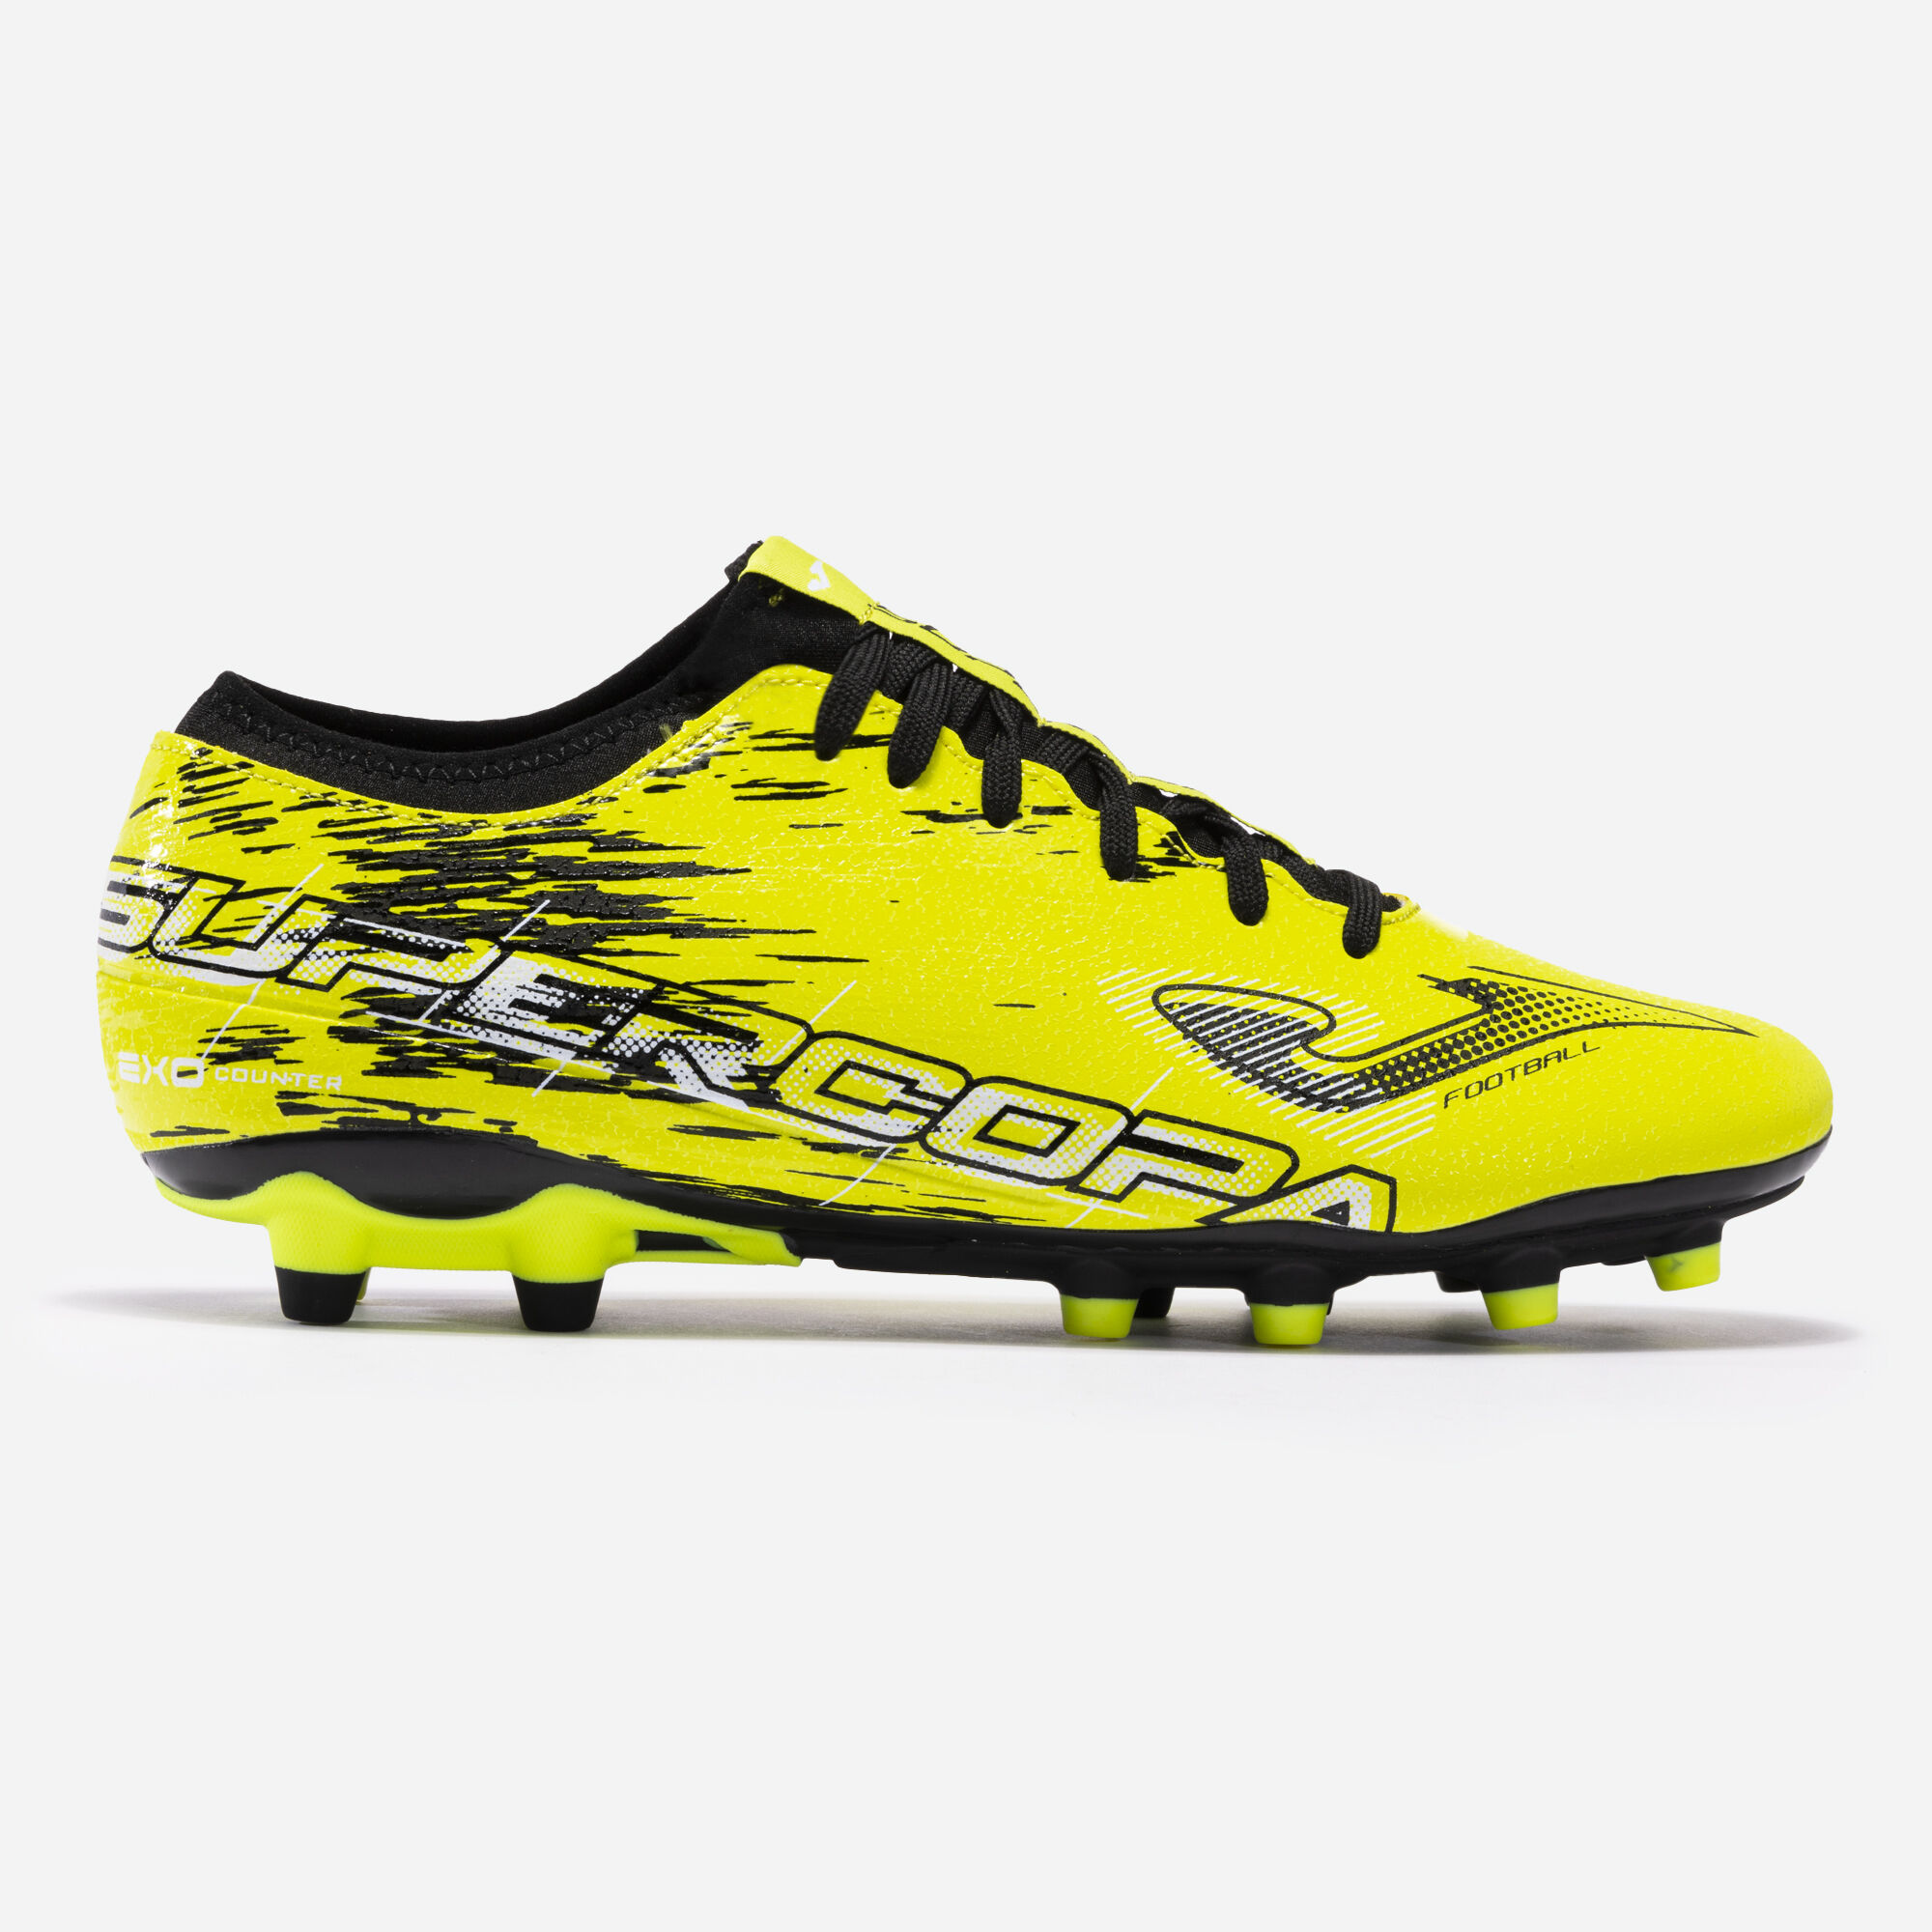 Football boots Supercopa 23 firm ground FG fluorescent yellow black